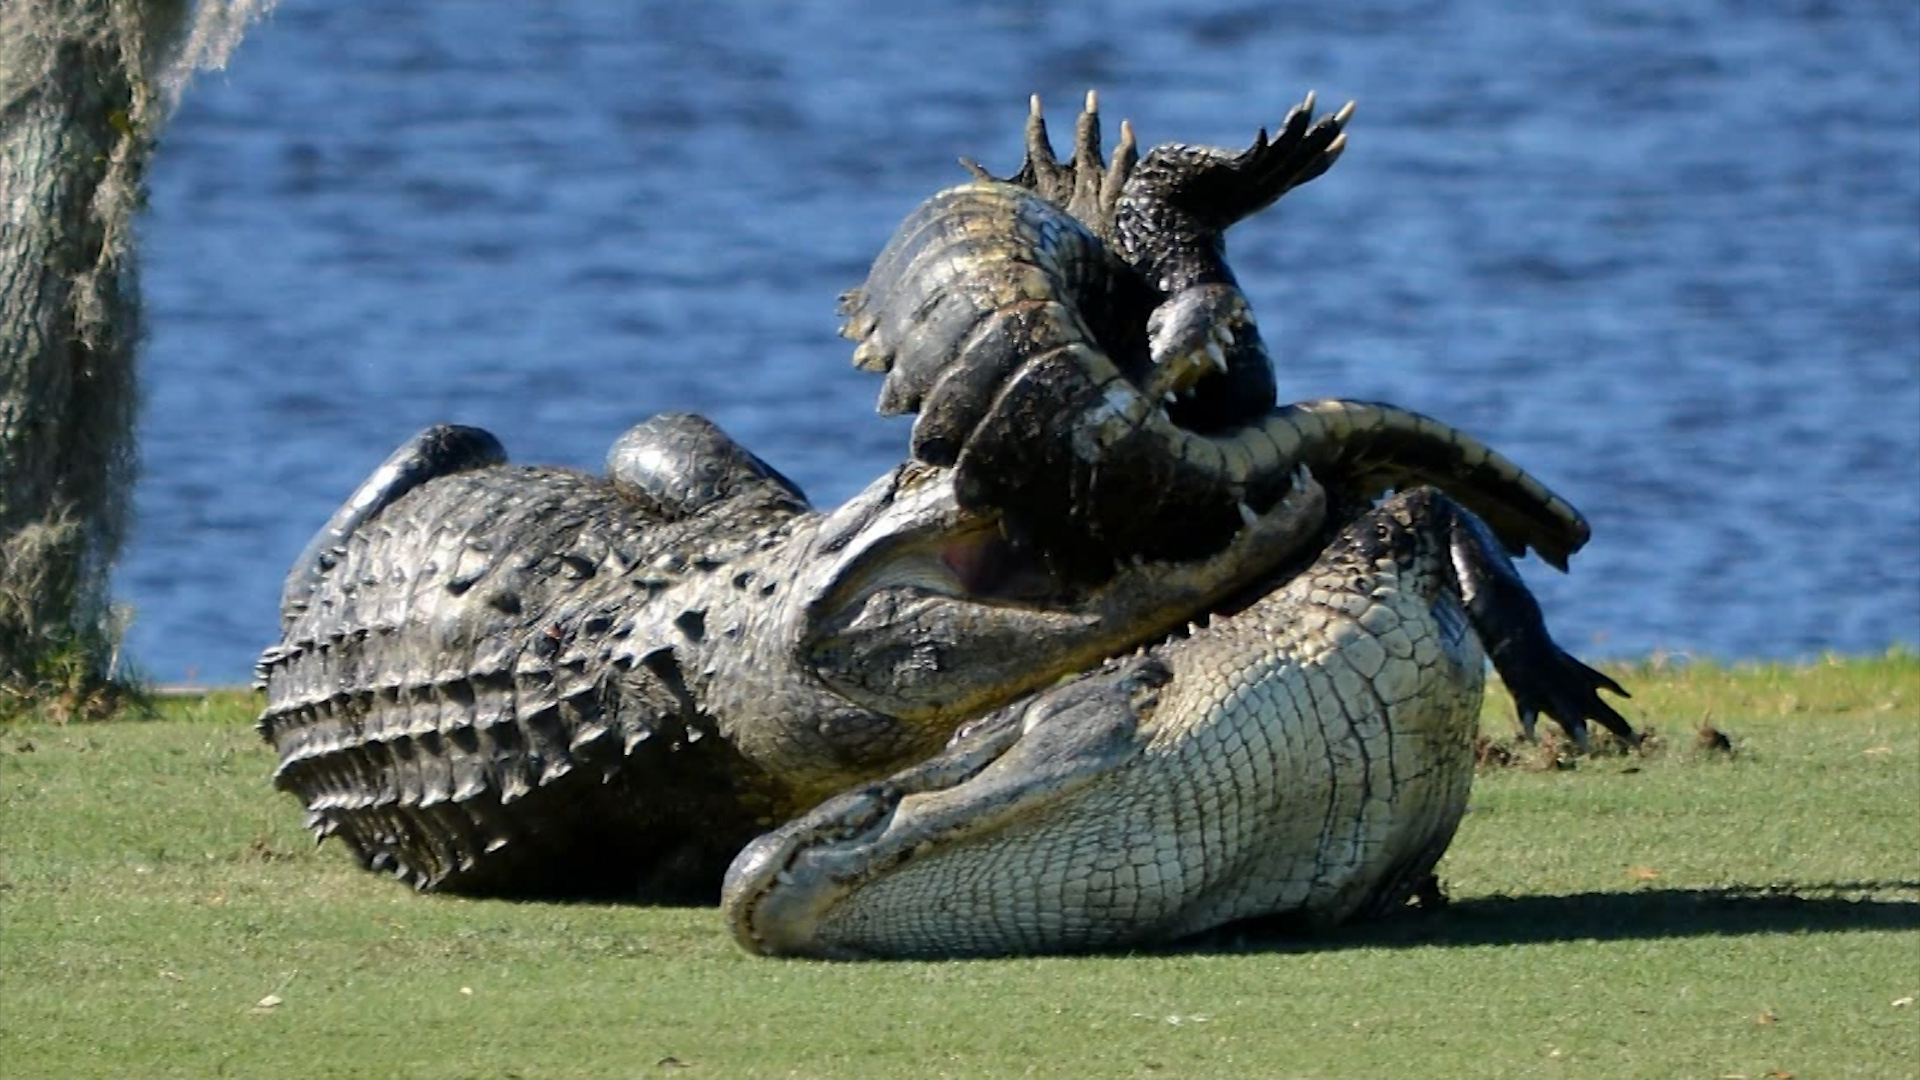 10-foot gators seen fighting on golf course - CNN Video